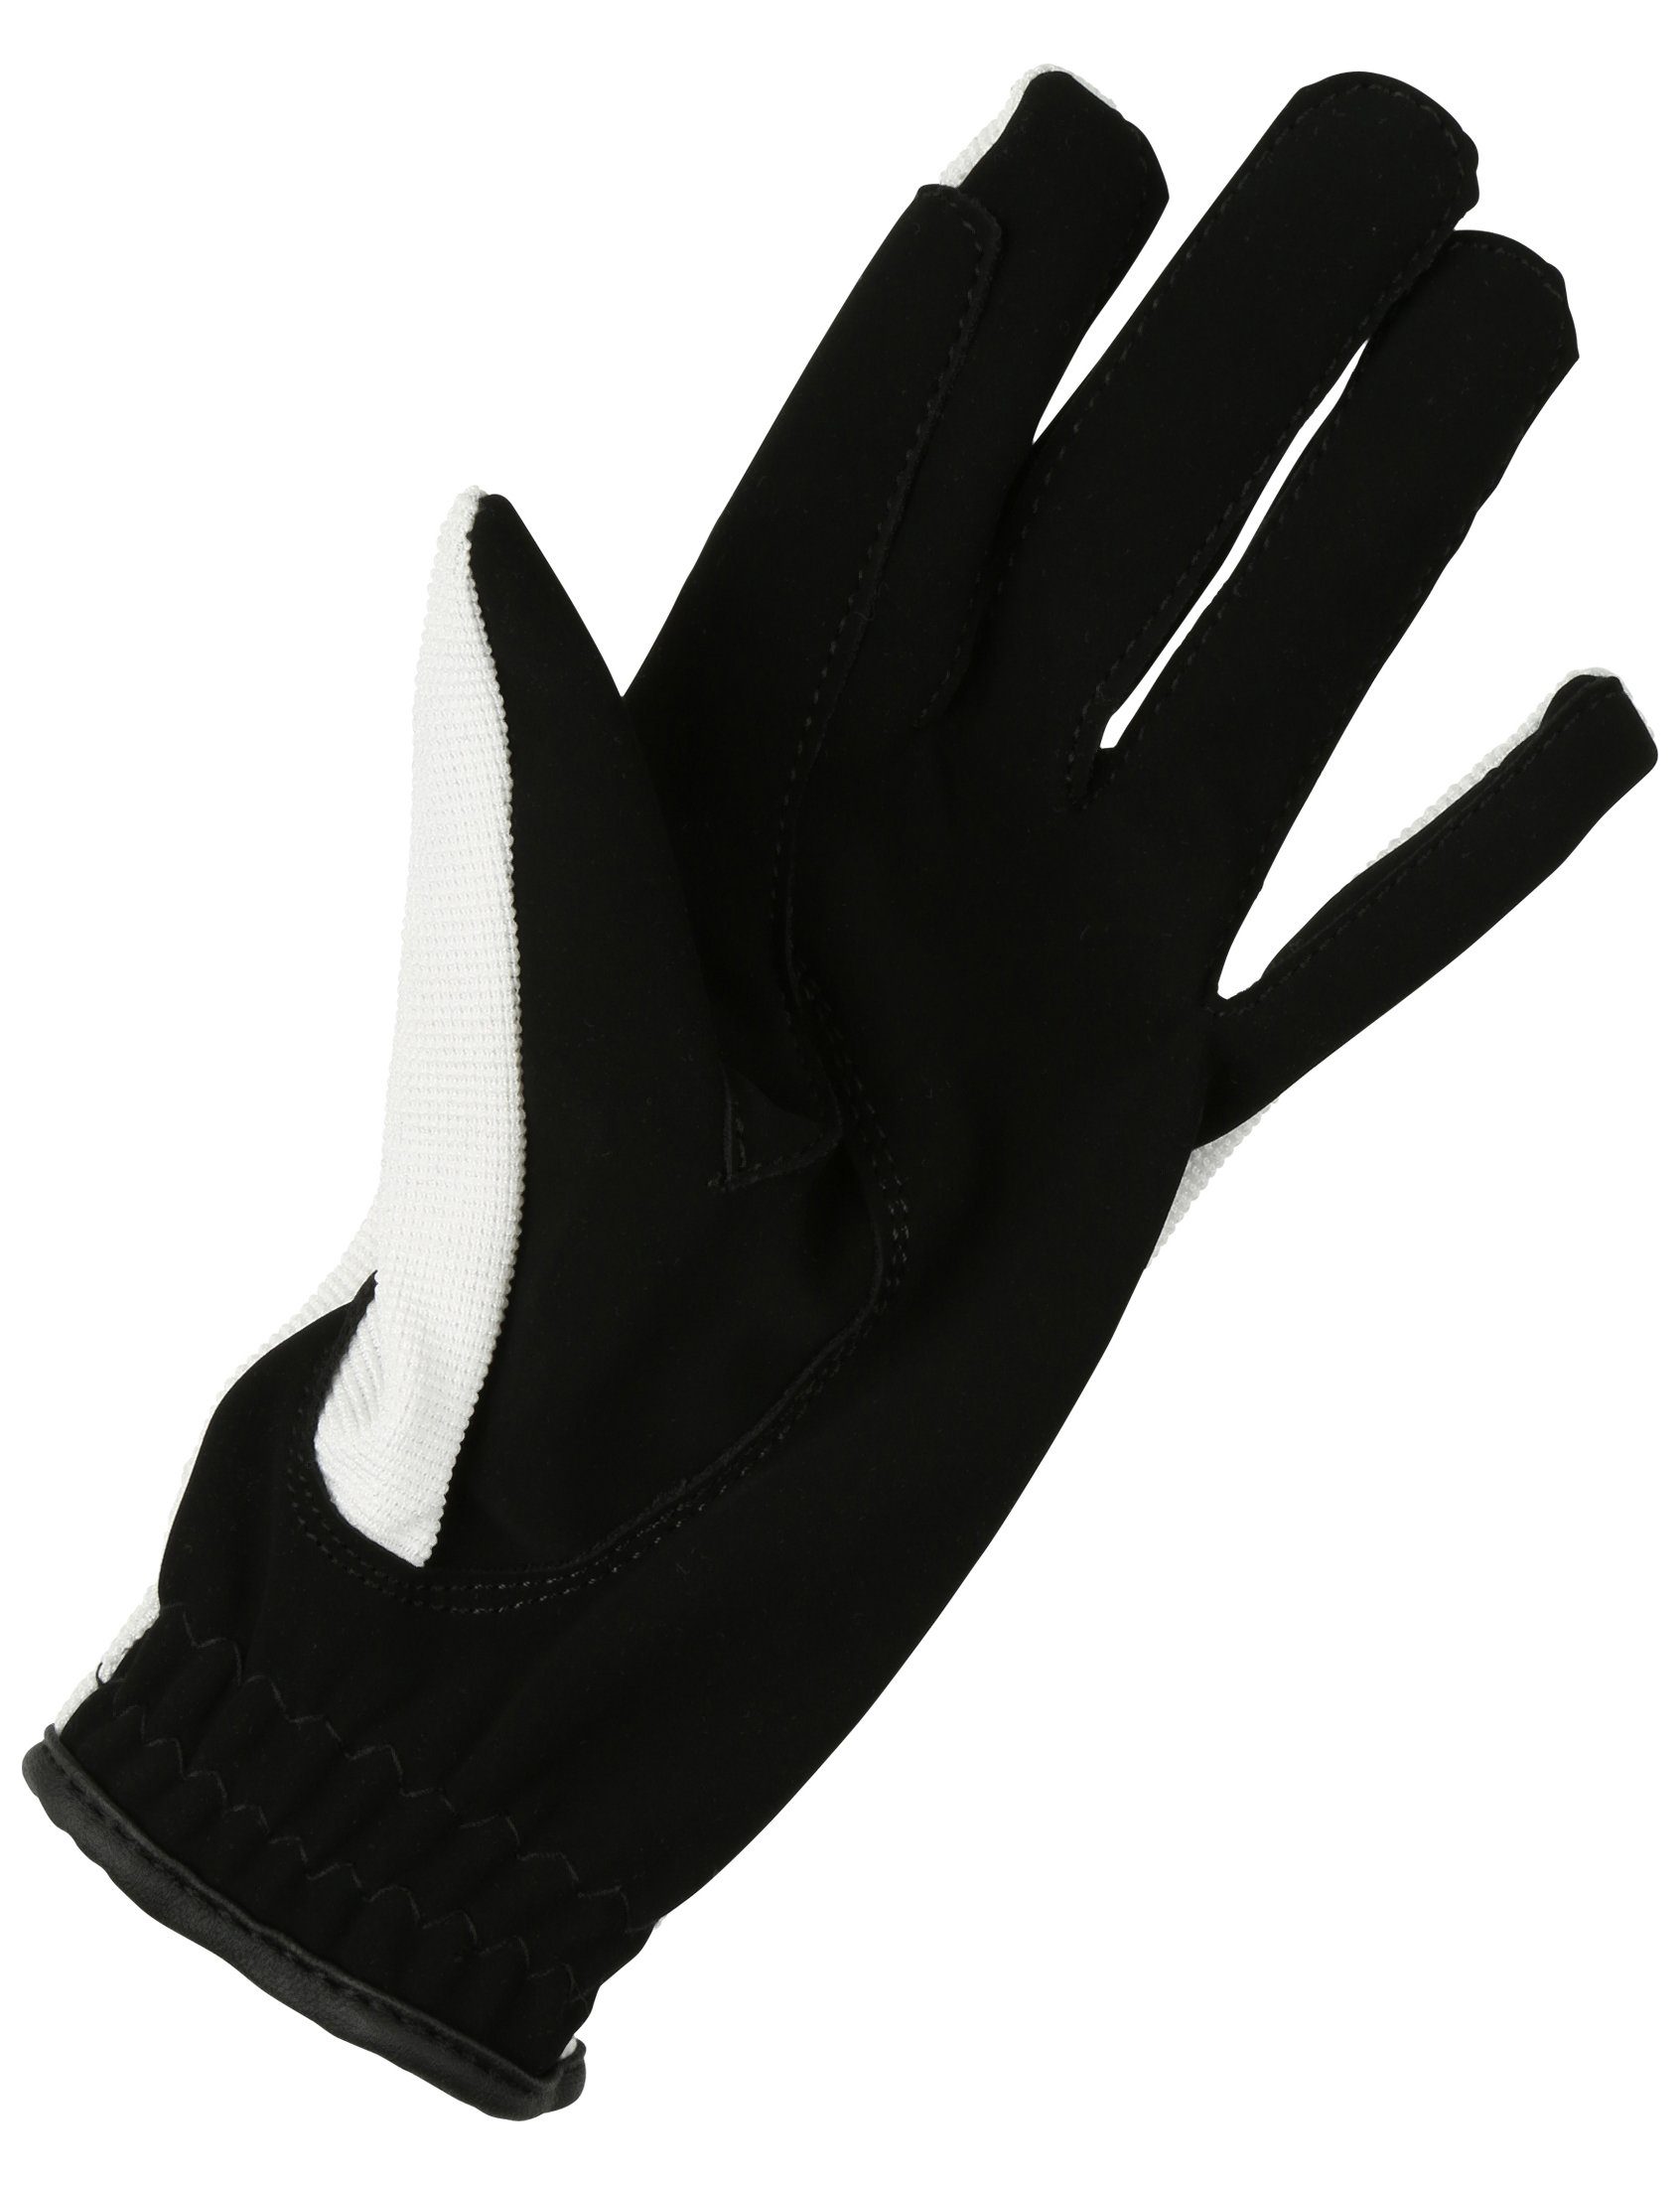 Fleecehandschuhe material REIT is Gloves Zoomyo the Schwarz/Weiß Handschuhe Damen thin pleasantly